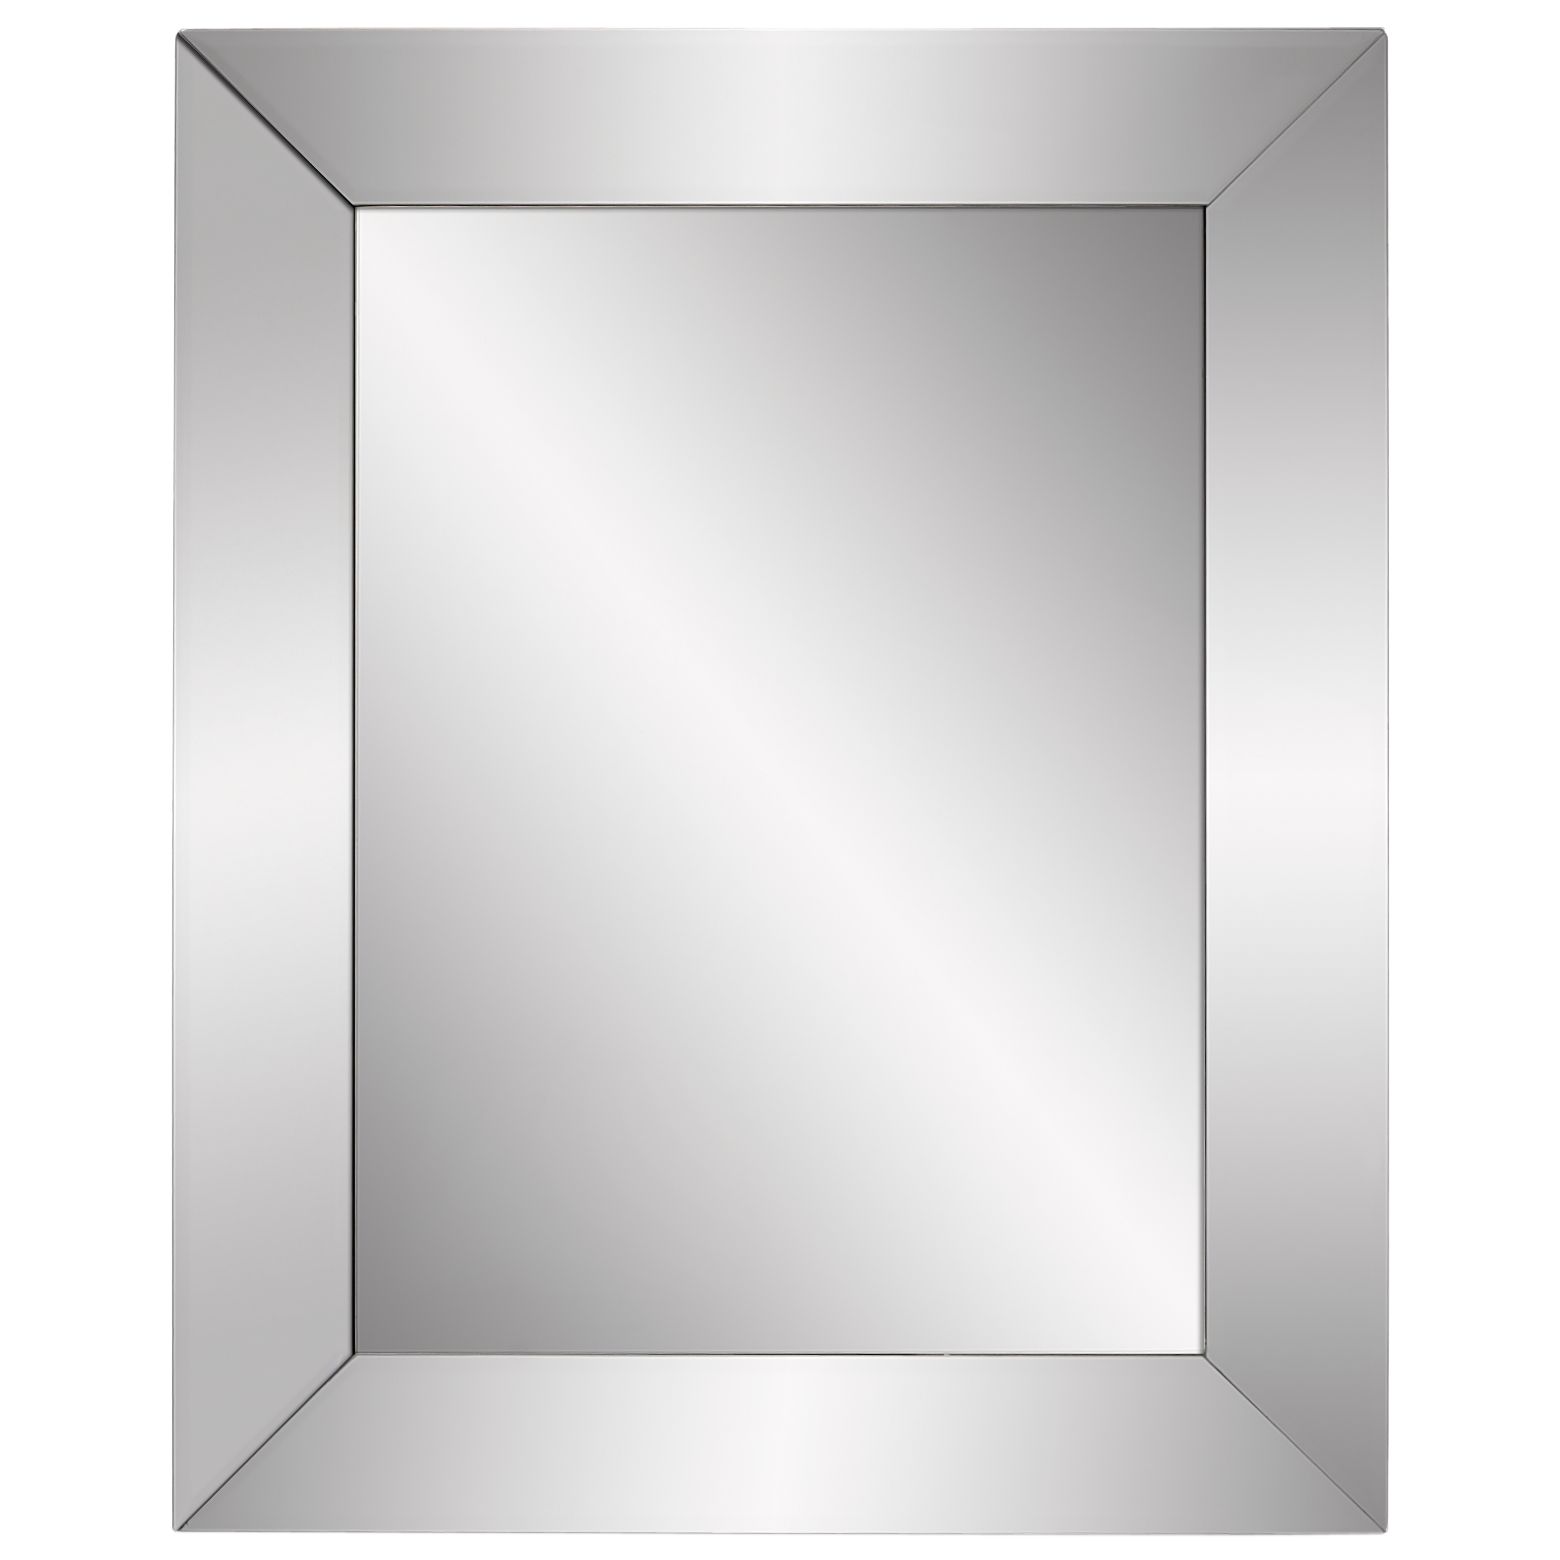 Bevel Simple Mirror, Small, H50 x W40cm